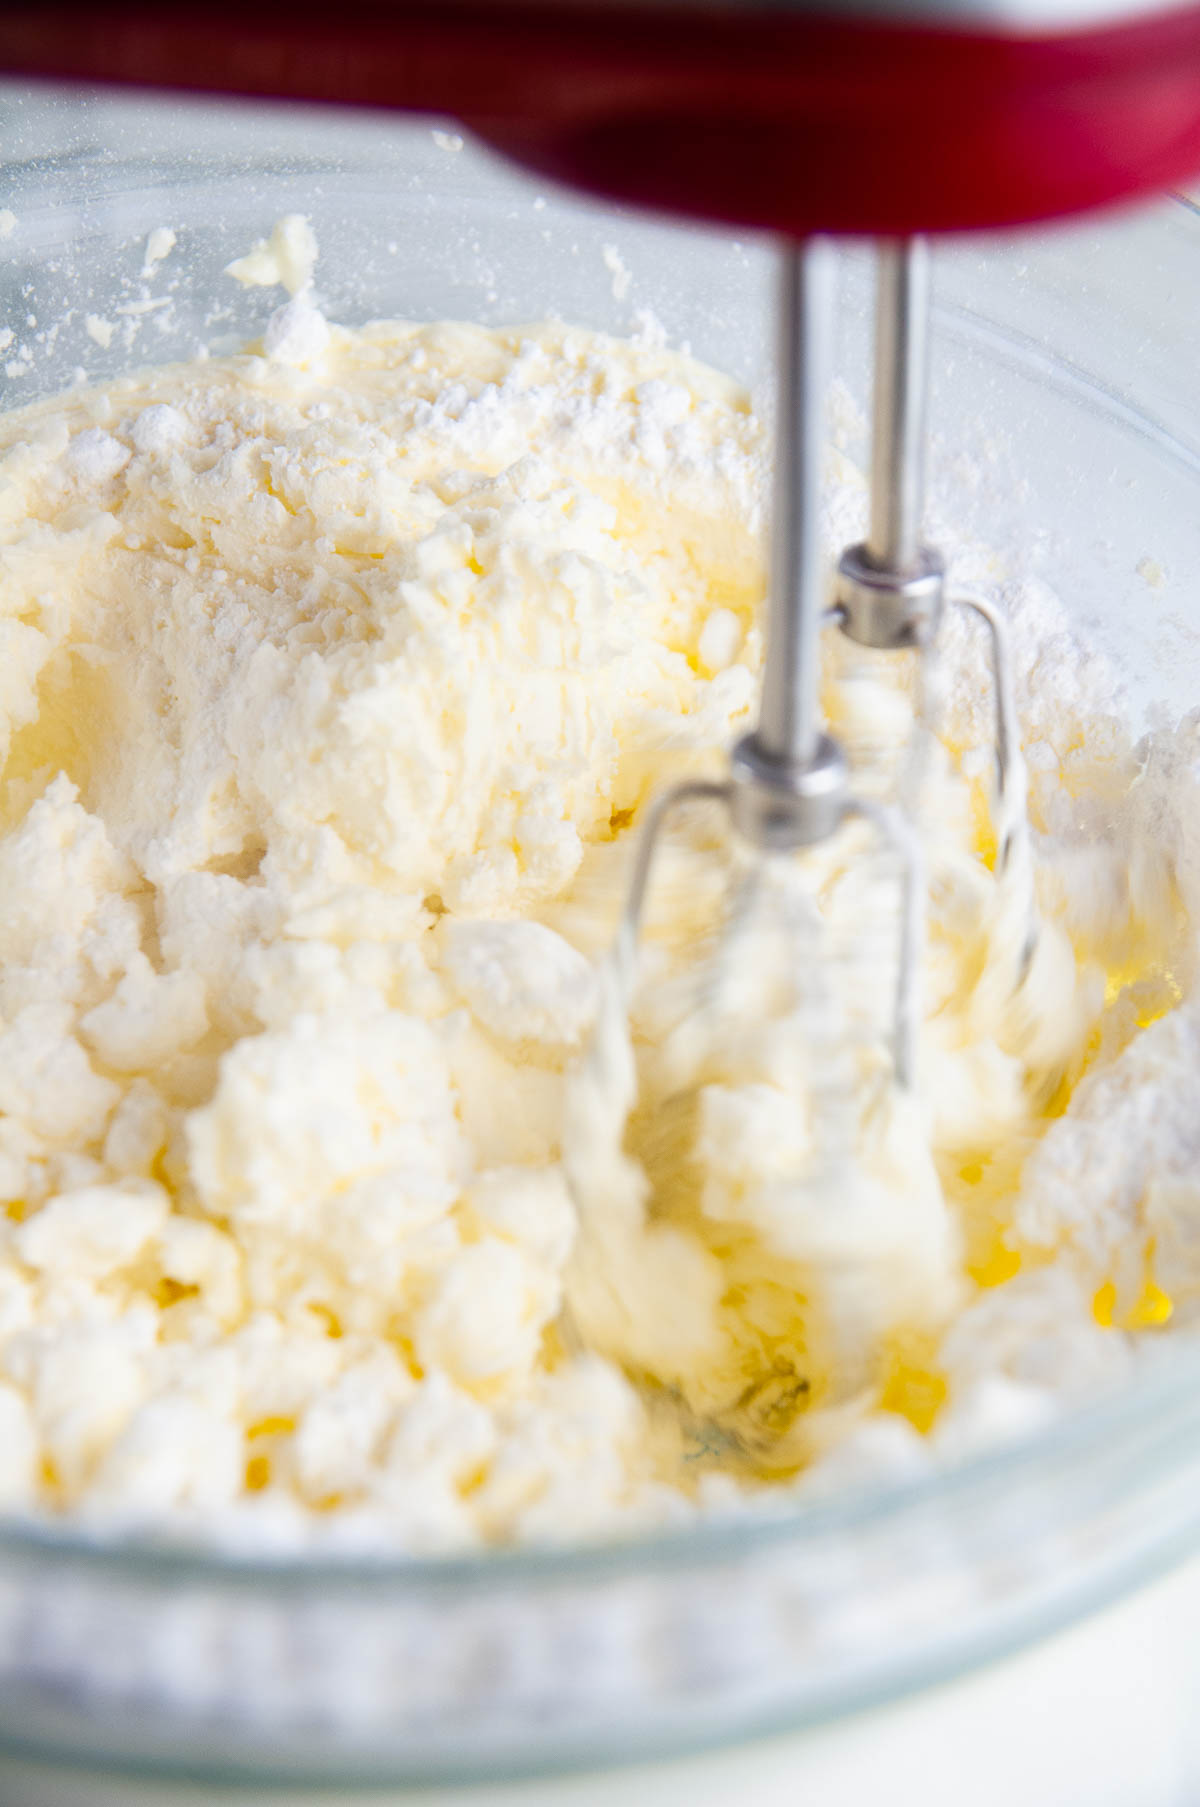 Beat the butter with the sugar, cream, salt, and vanilla to make vanilla buttercream.